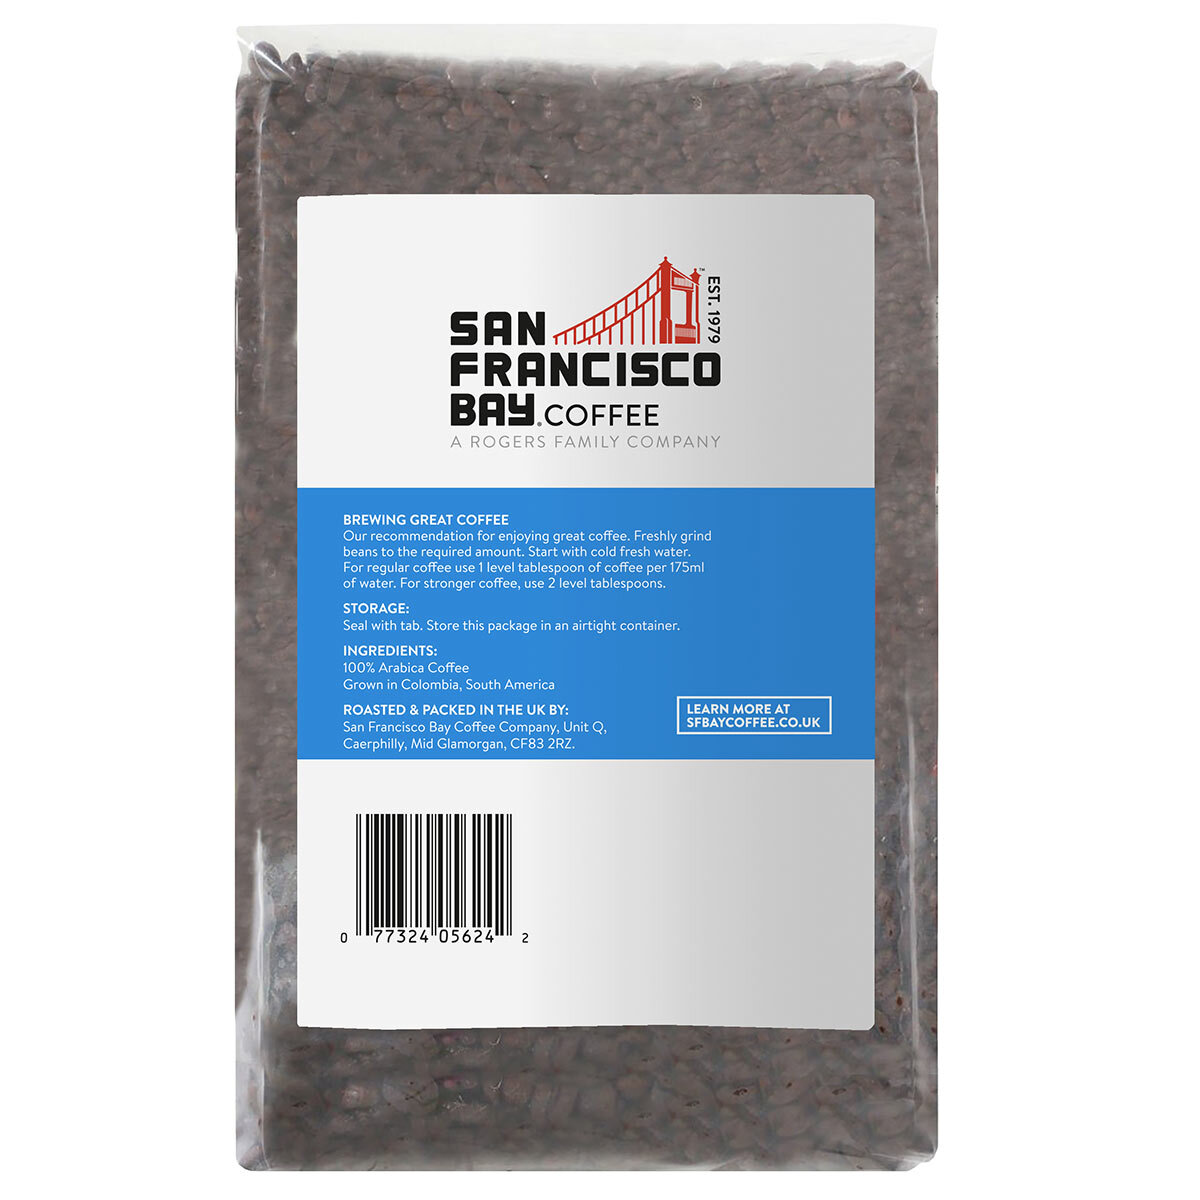 San Francisco Bay Colombian Supremo Whole Bean Coffee, 908g